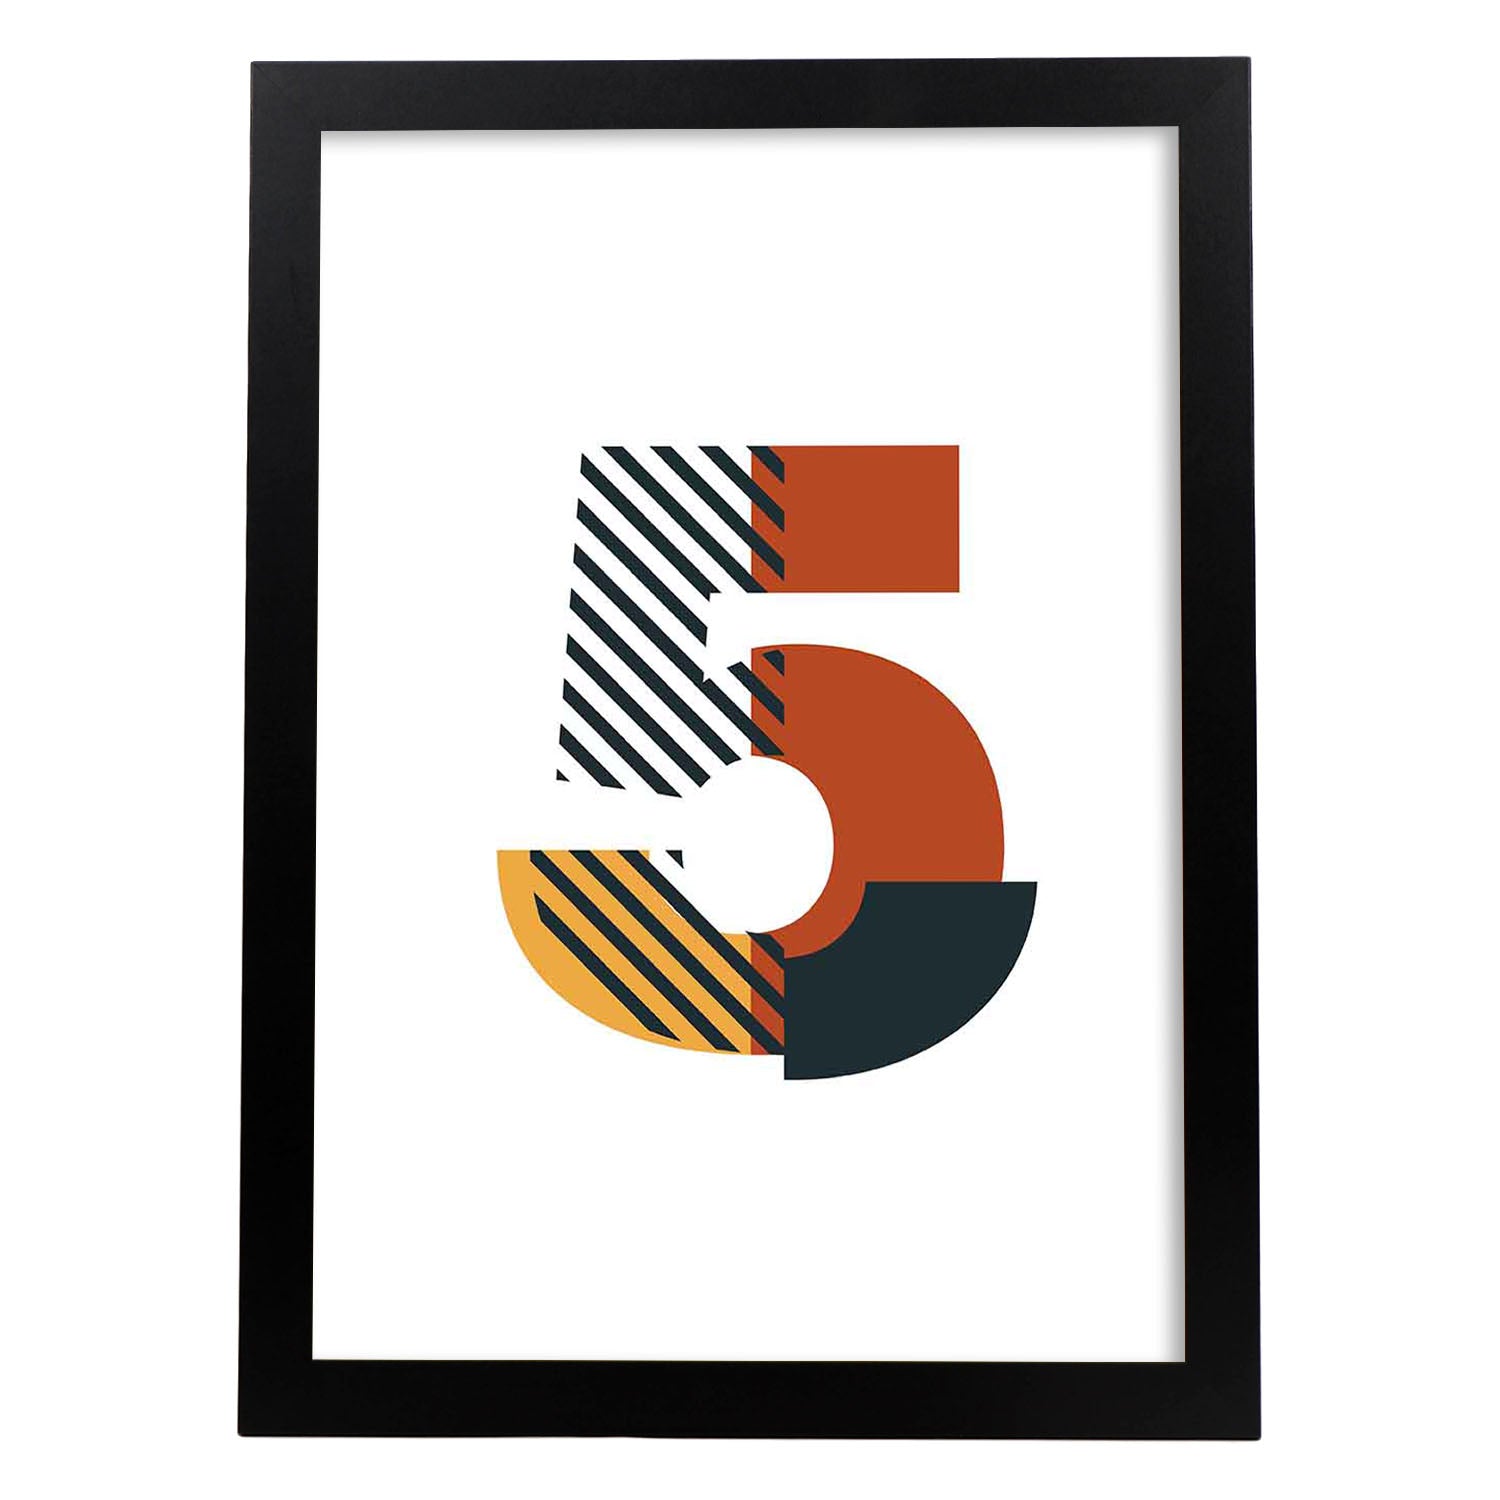 Poster de número 5. Lámina estilo Geometria con imágenes del alfabeto.-Artwork-Nacnic-A4-Marco Negro-Nacnic Estudio SL